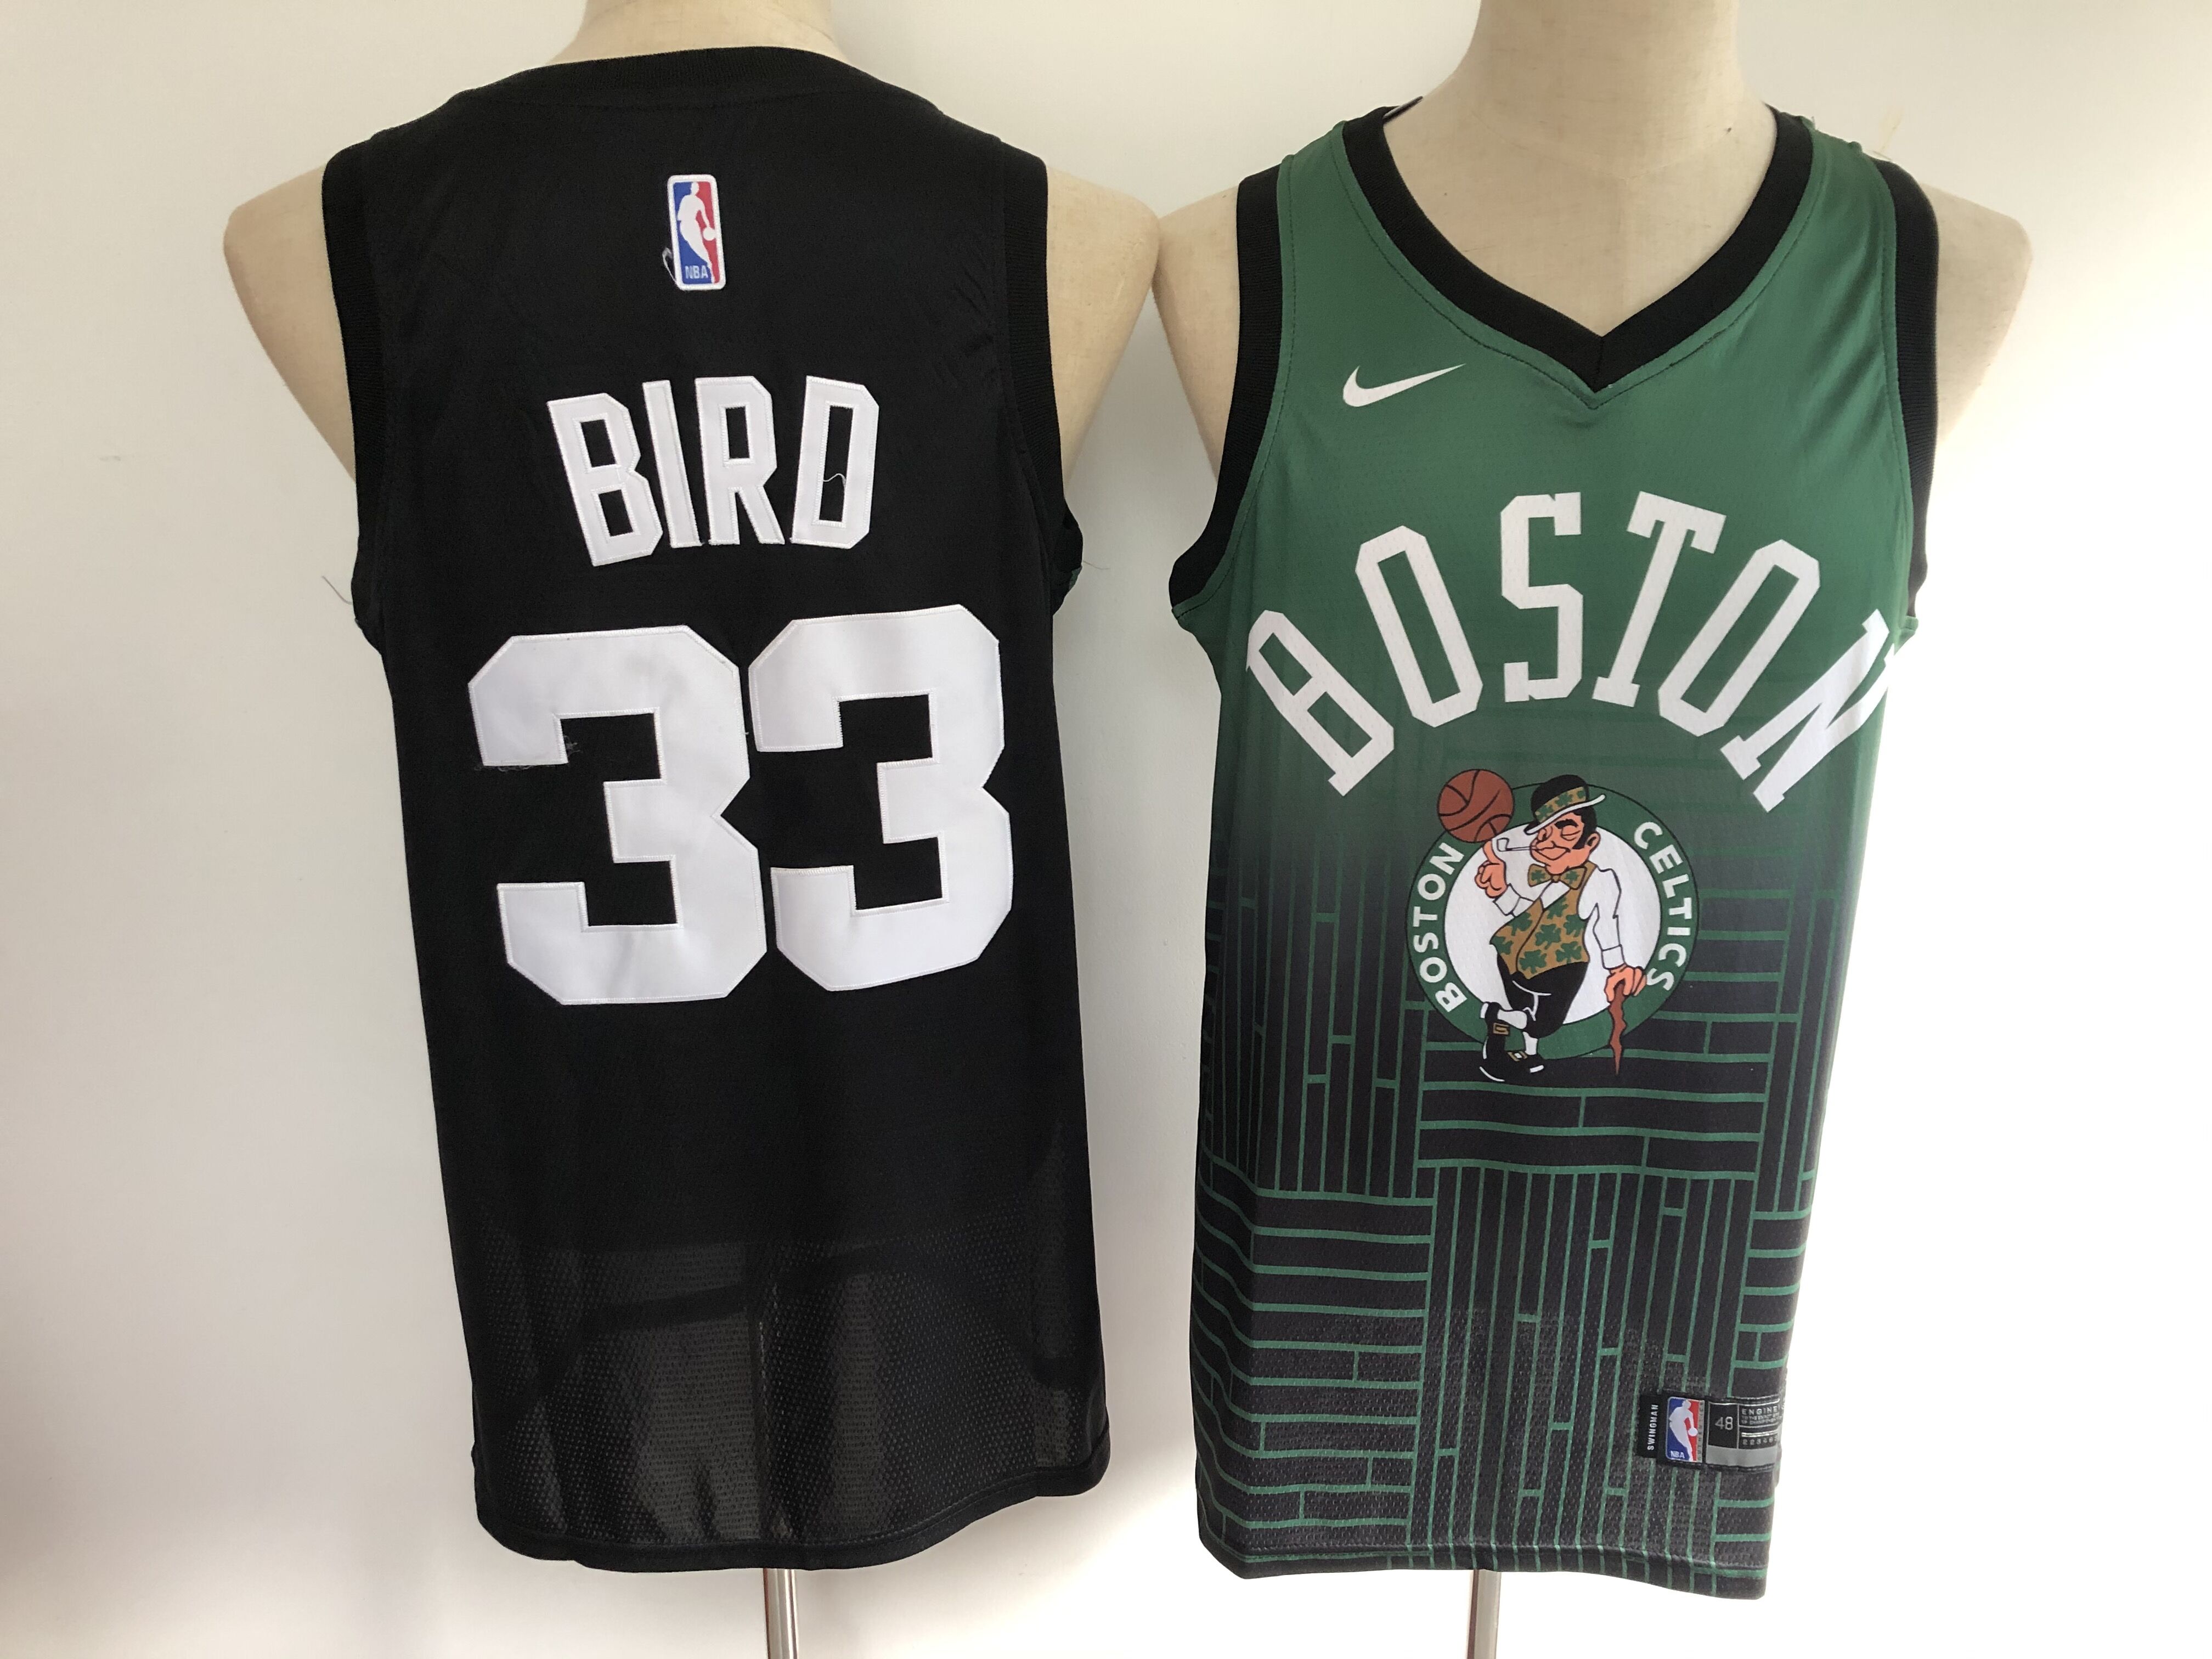 2020 Men Boston Celtics #33 Bird Black green Game Nike NBA Jerseys